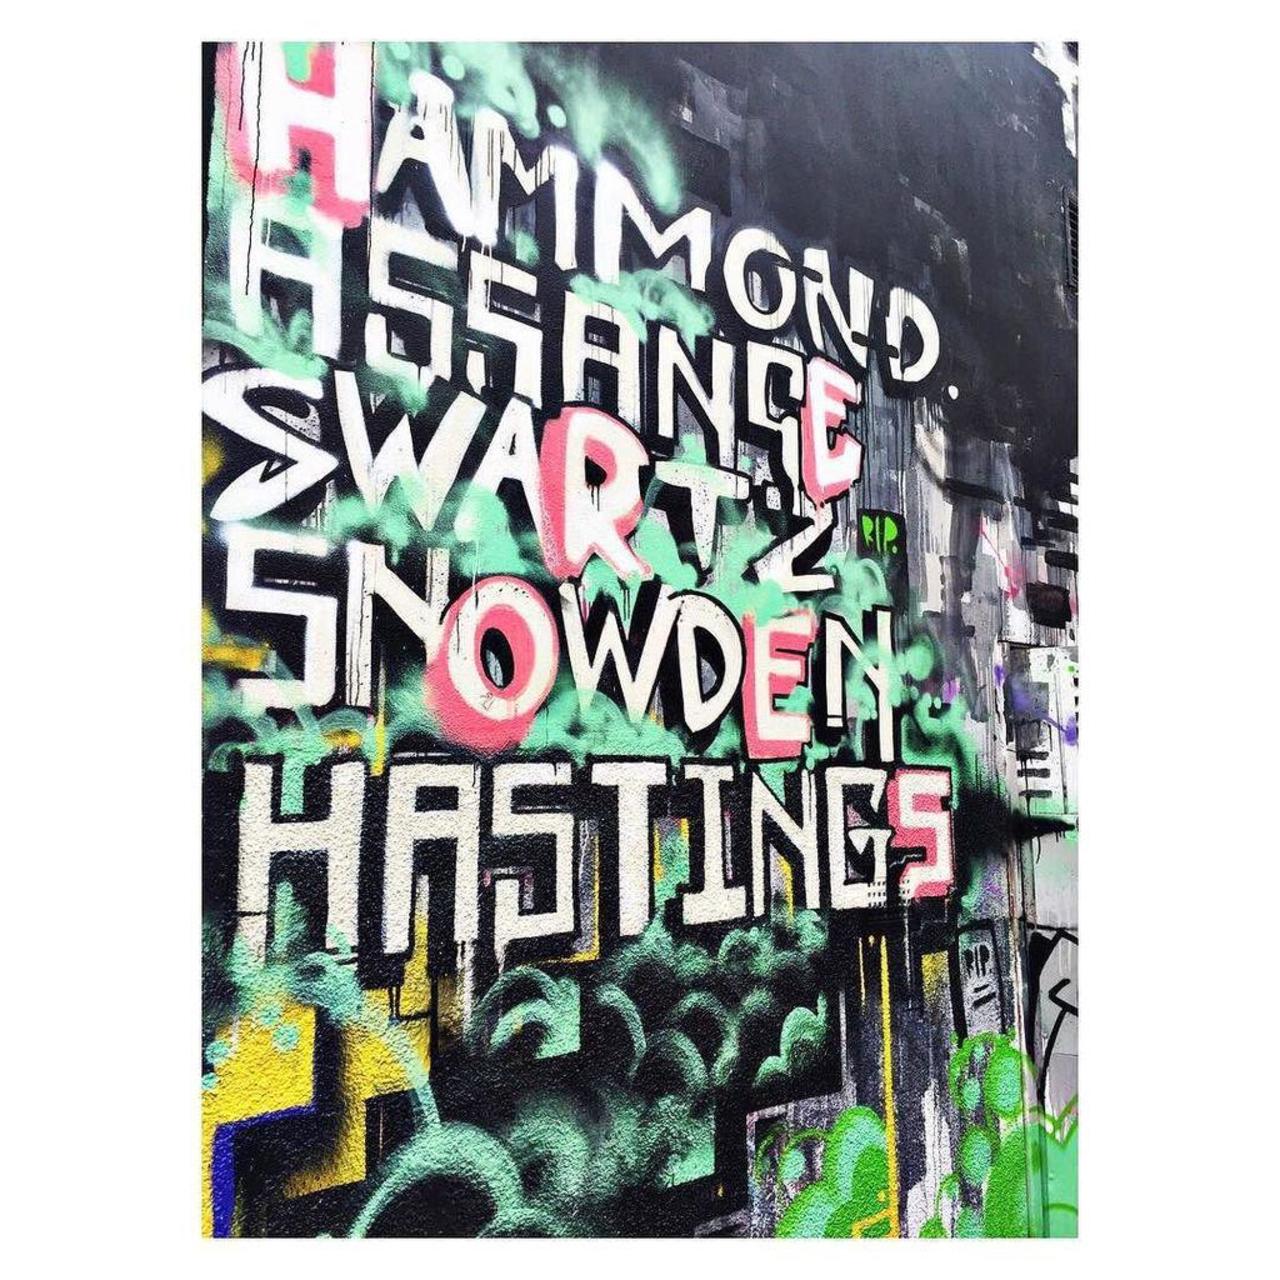 London walls Pt III  #streetart #graffiti #wallmural #spraypaint #paint #stickers #tags #wall #mural #camden #camd… http://t.co/gY8DJIzik3